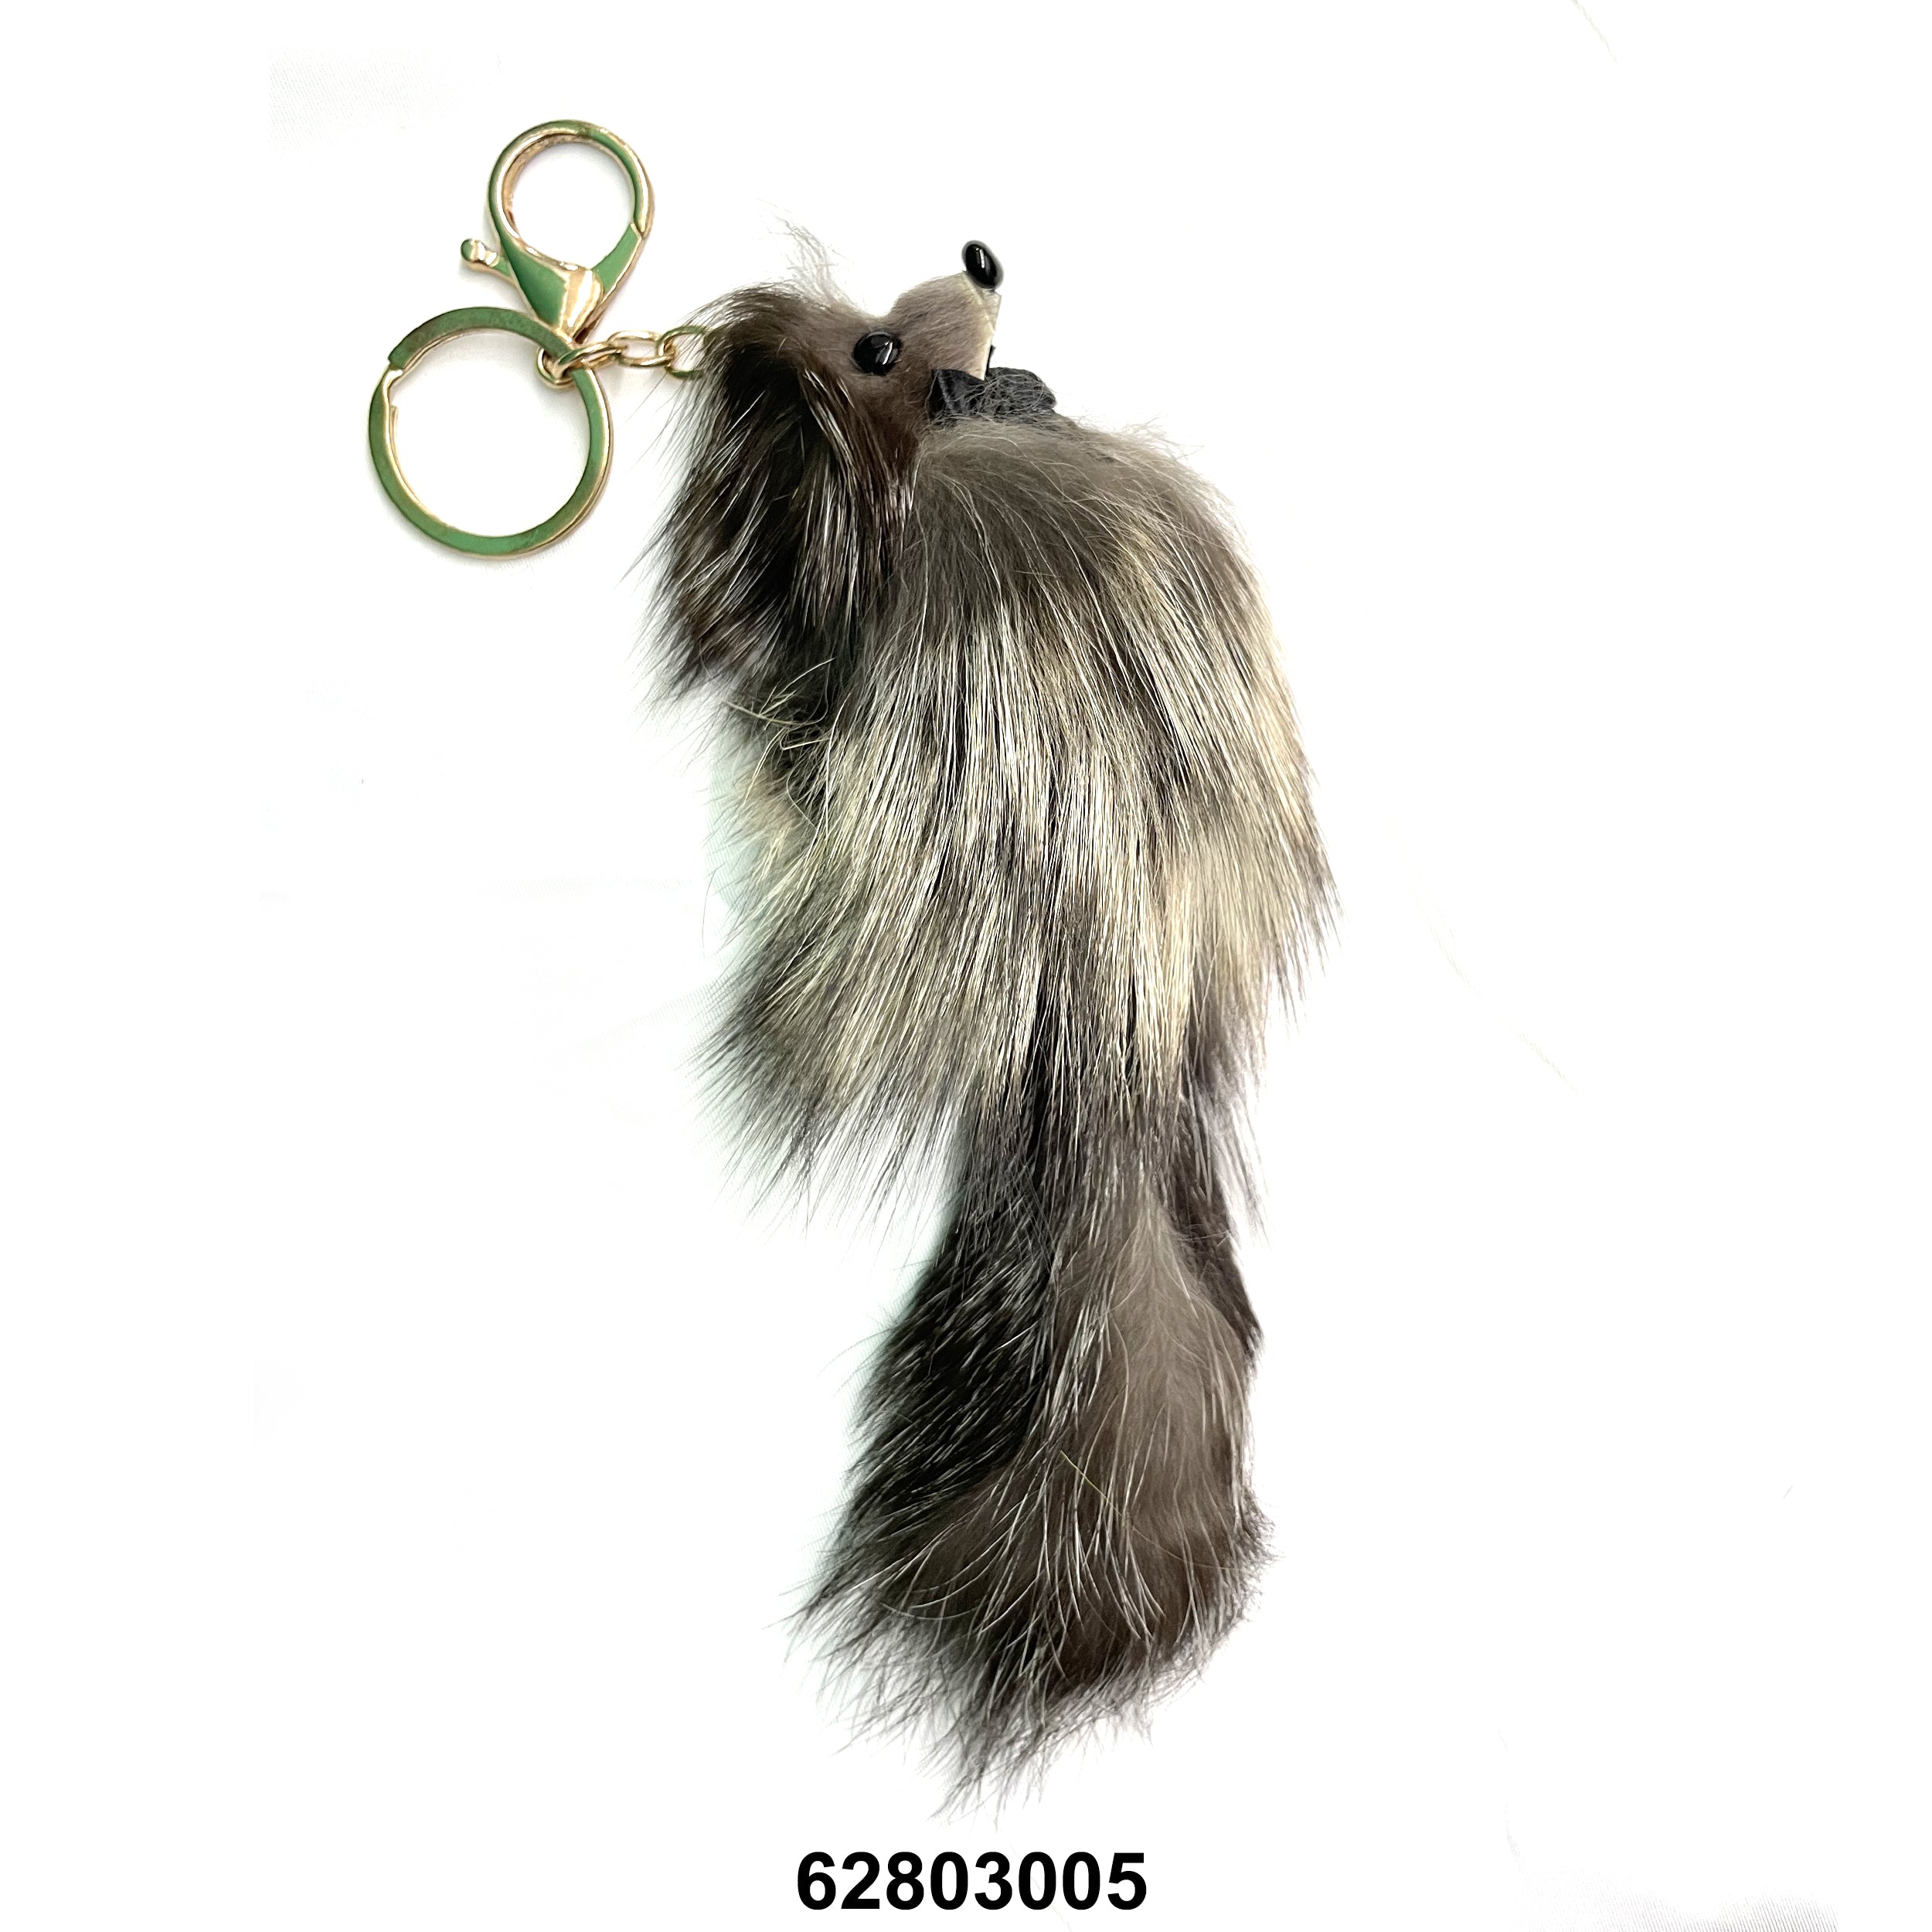 Cute Furry Animal 62803005